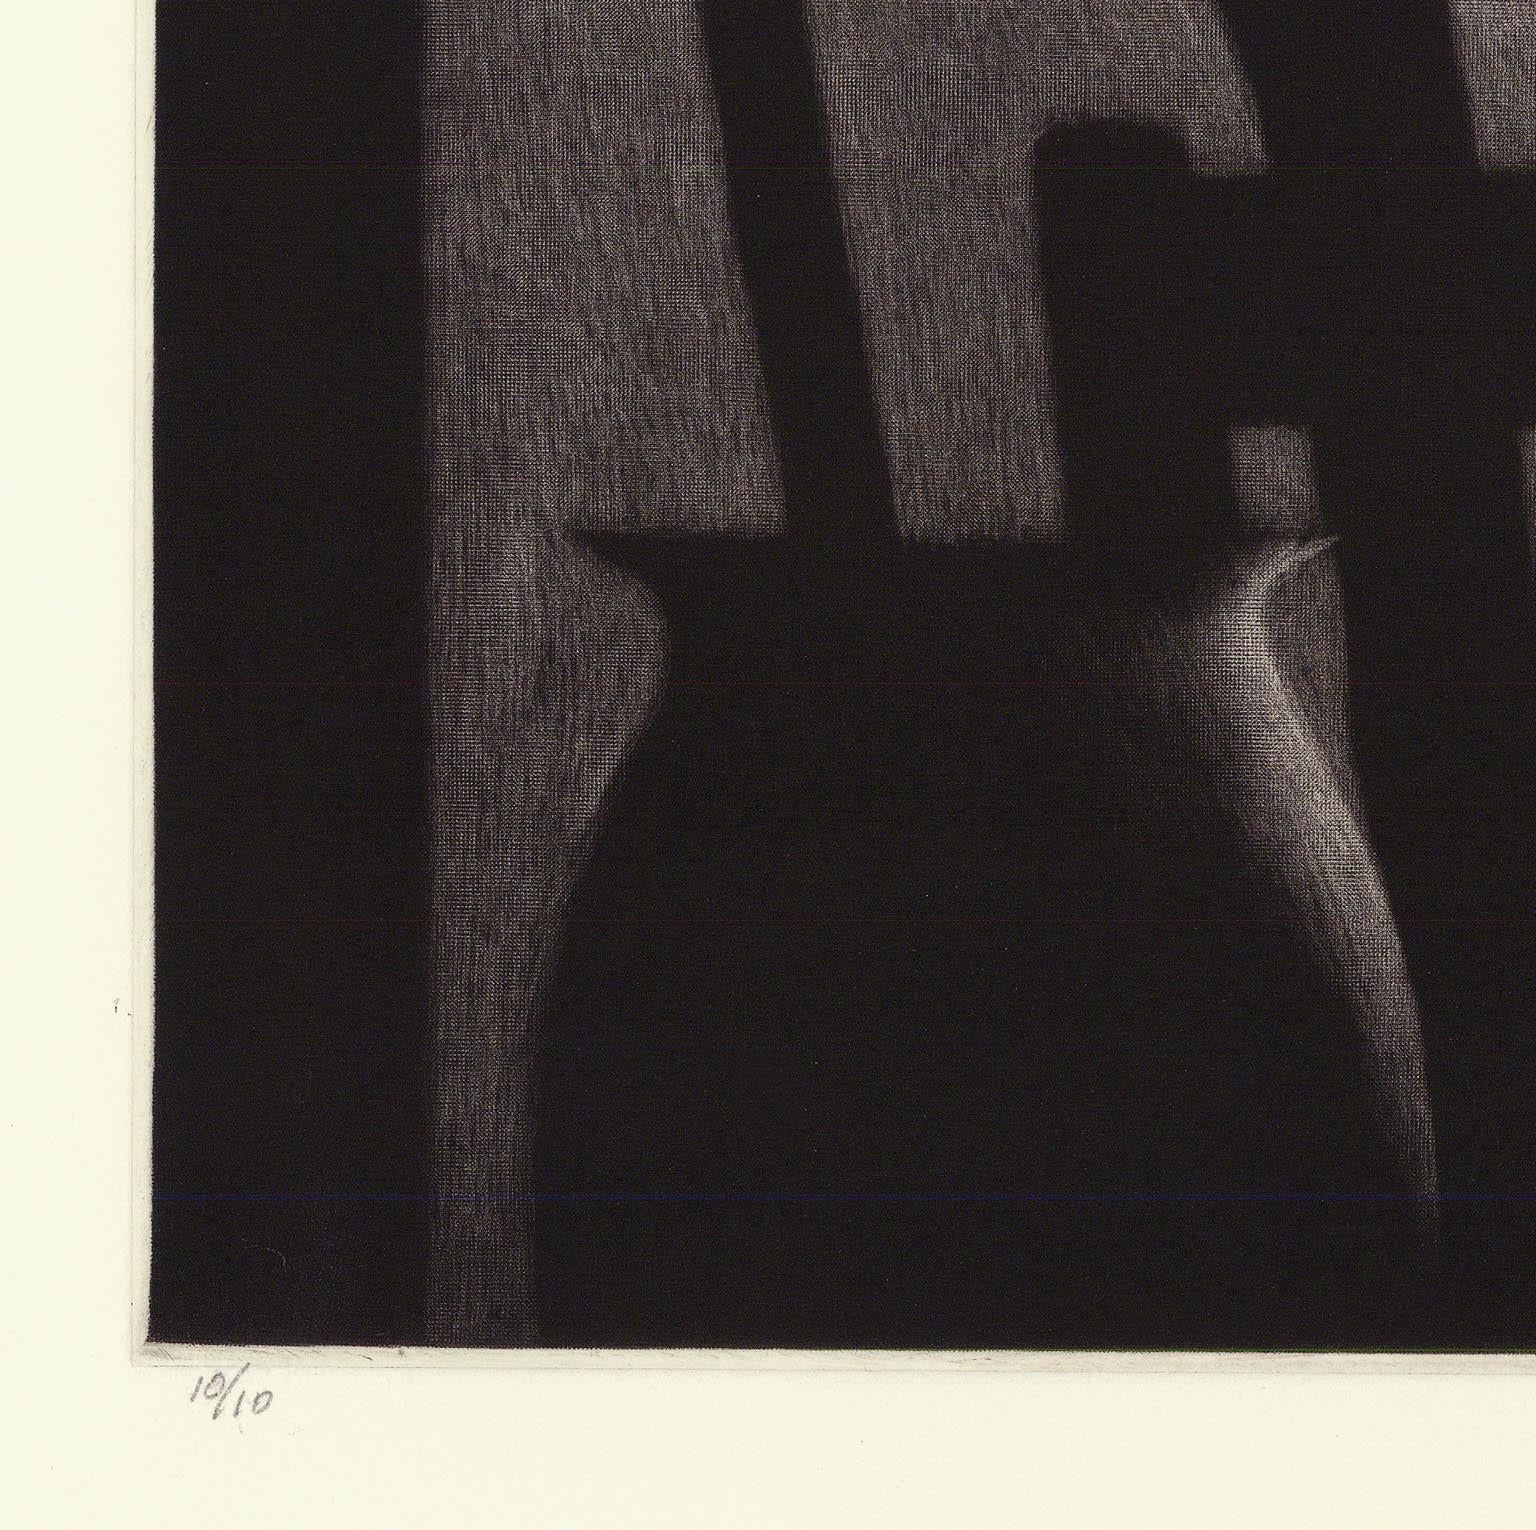 Window w/shade, chair, vase & trees - Modern Print by Robert Kipniss